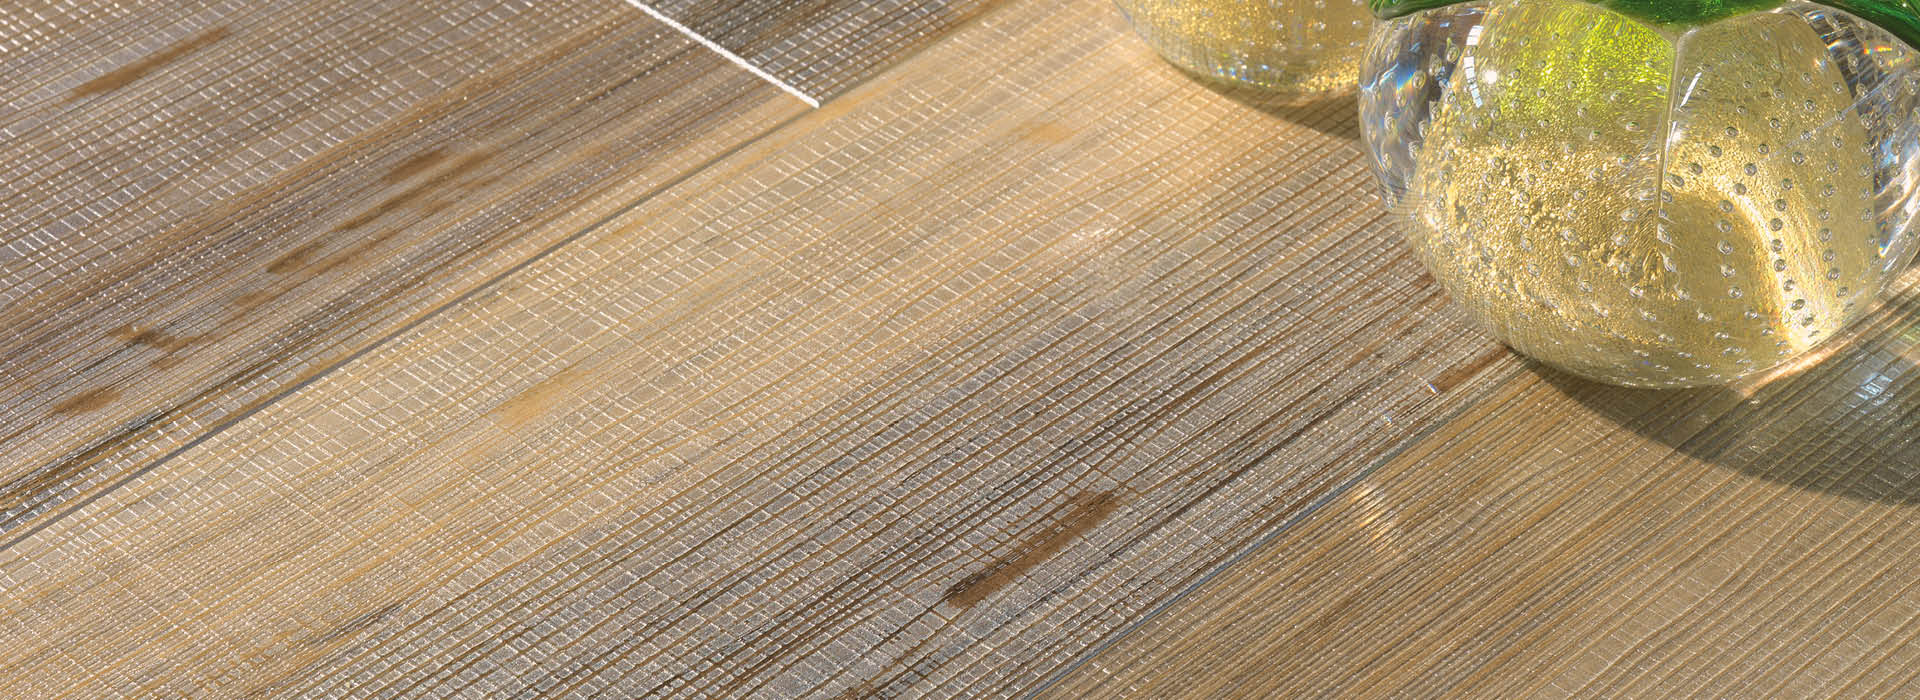 texture-design-weave-planks-1-2117